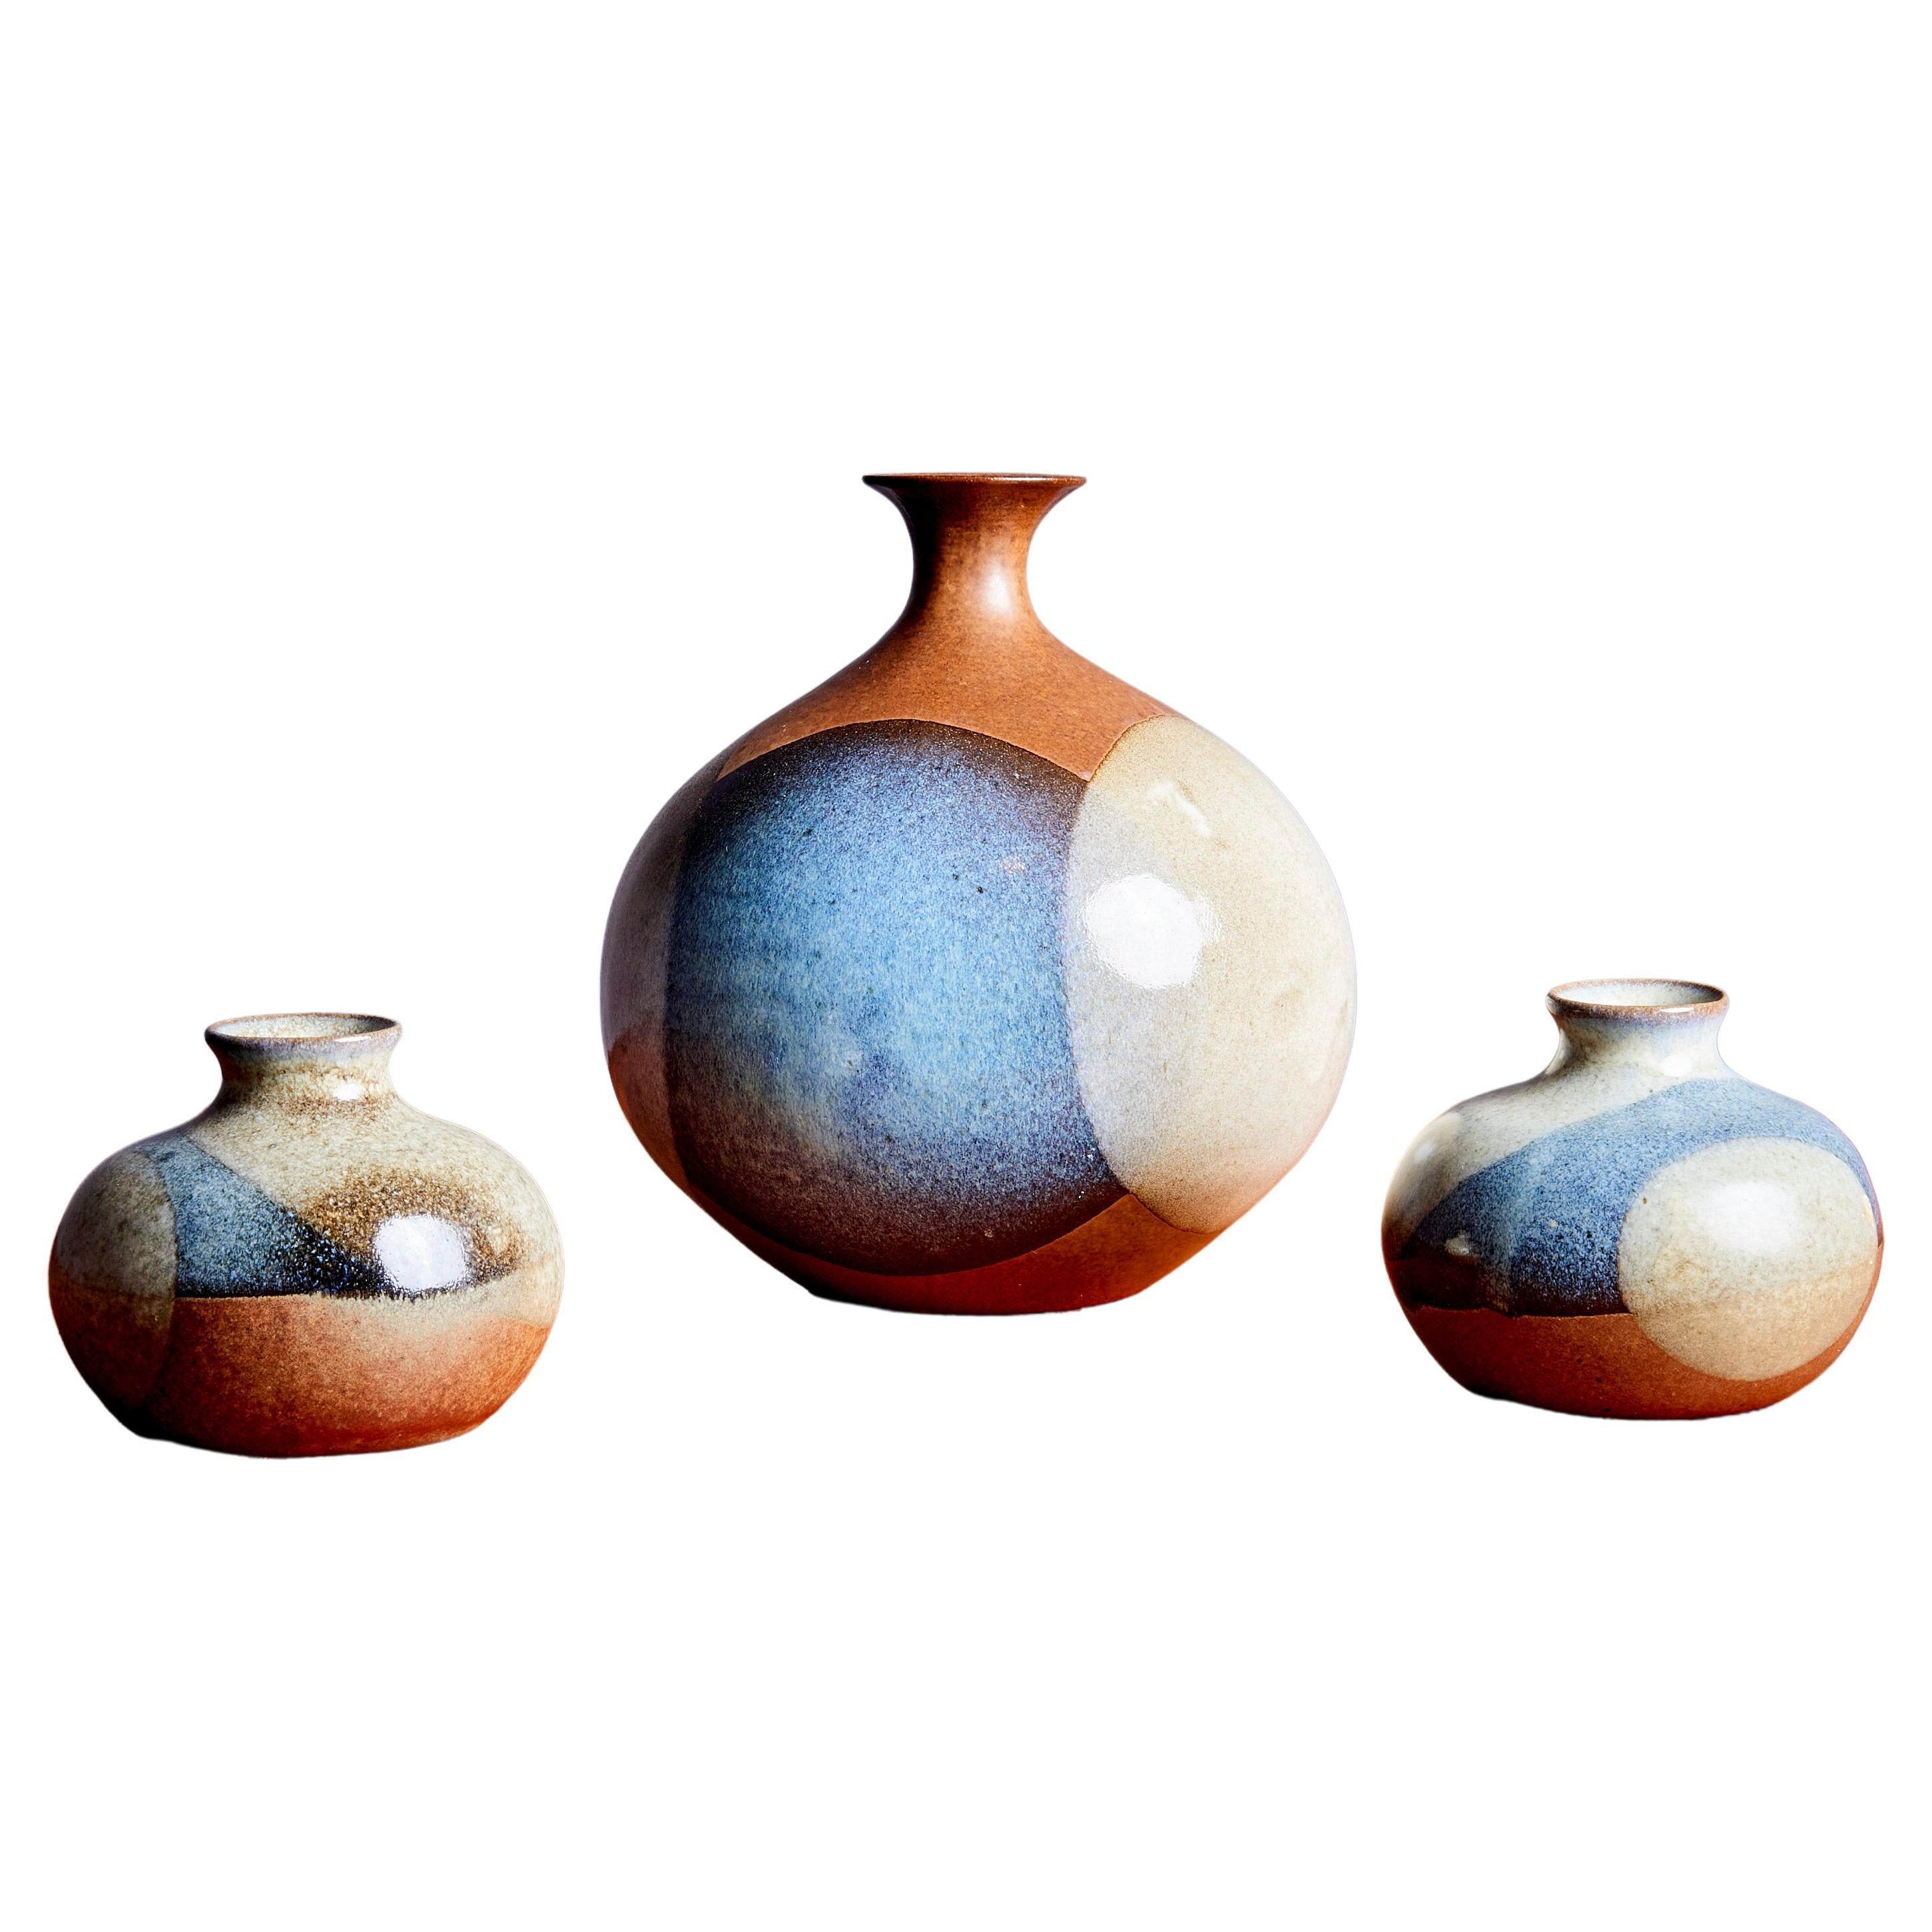 Robert Maxwell Set of 3 Ceramic Vases, USA - 1970s 